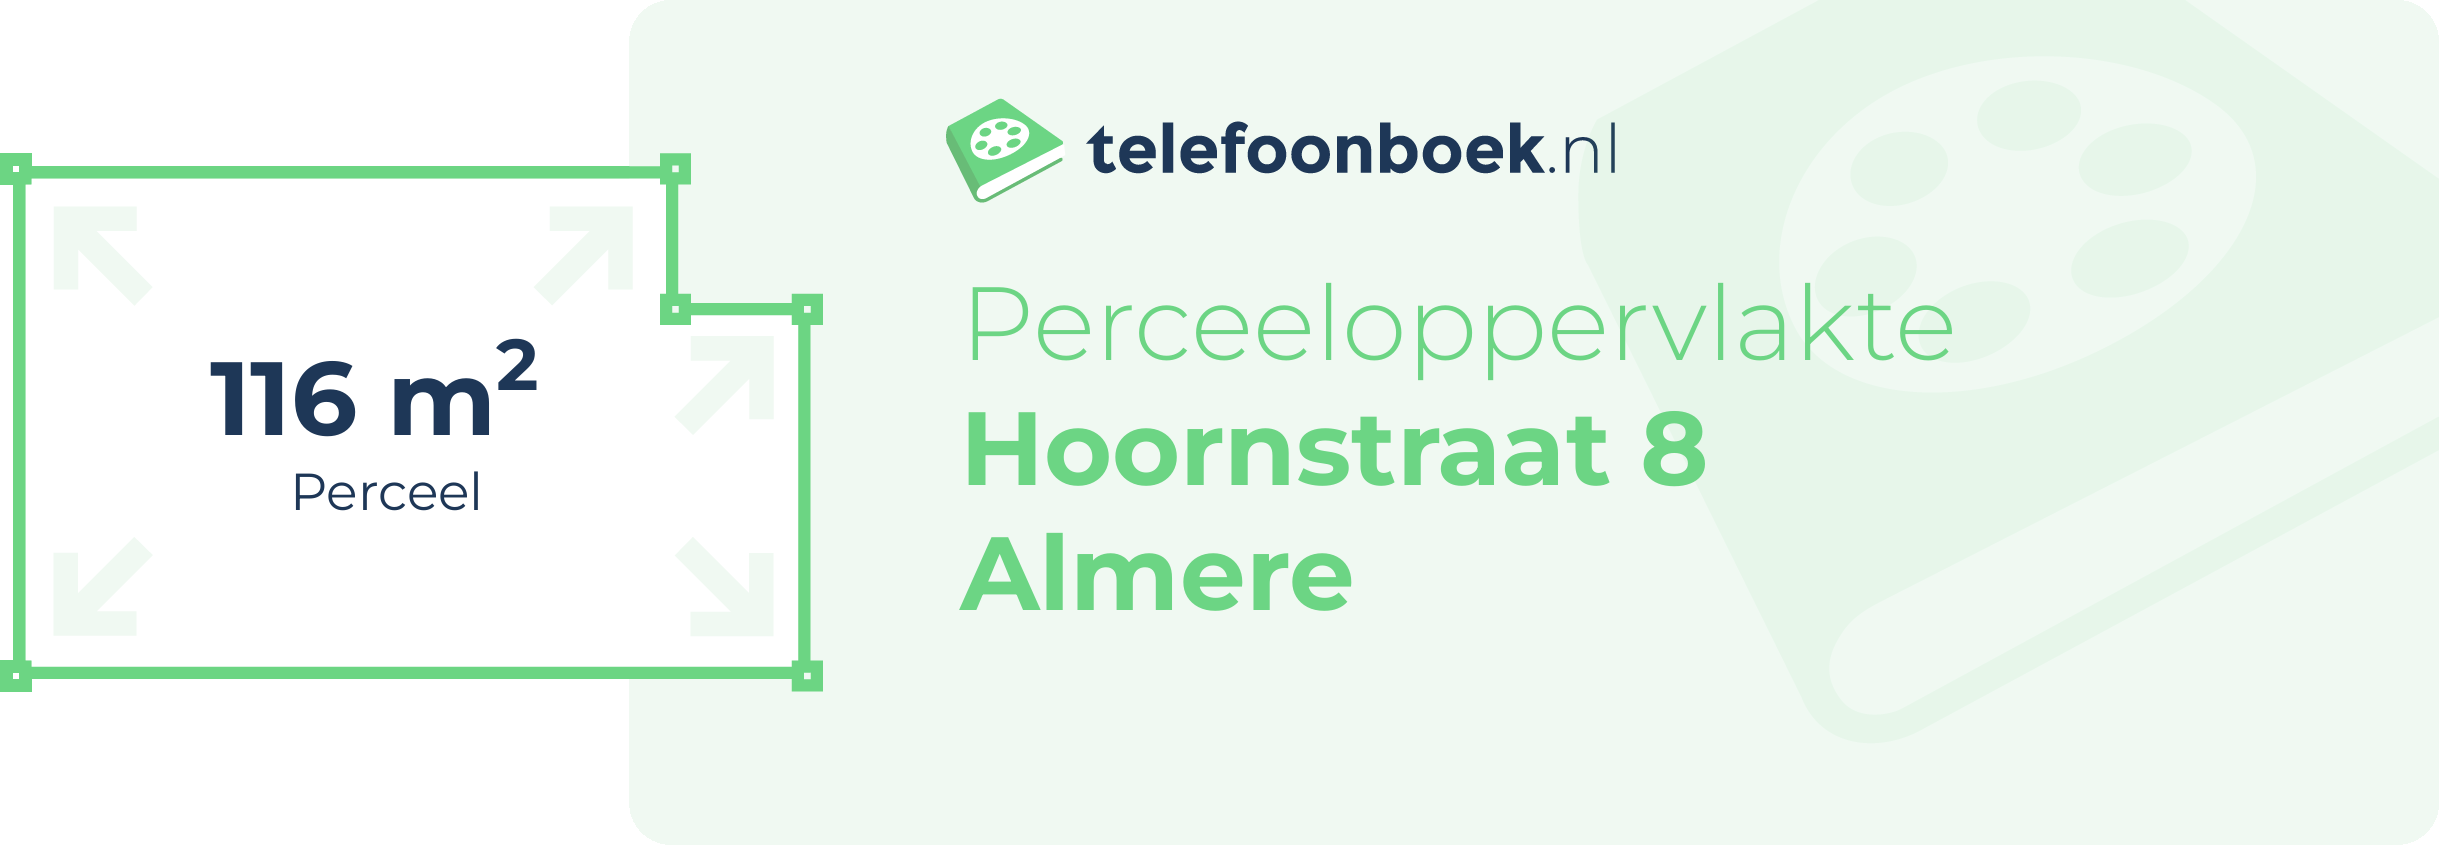 Perceeloppervlakte Hoornstraat 8 Almere